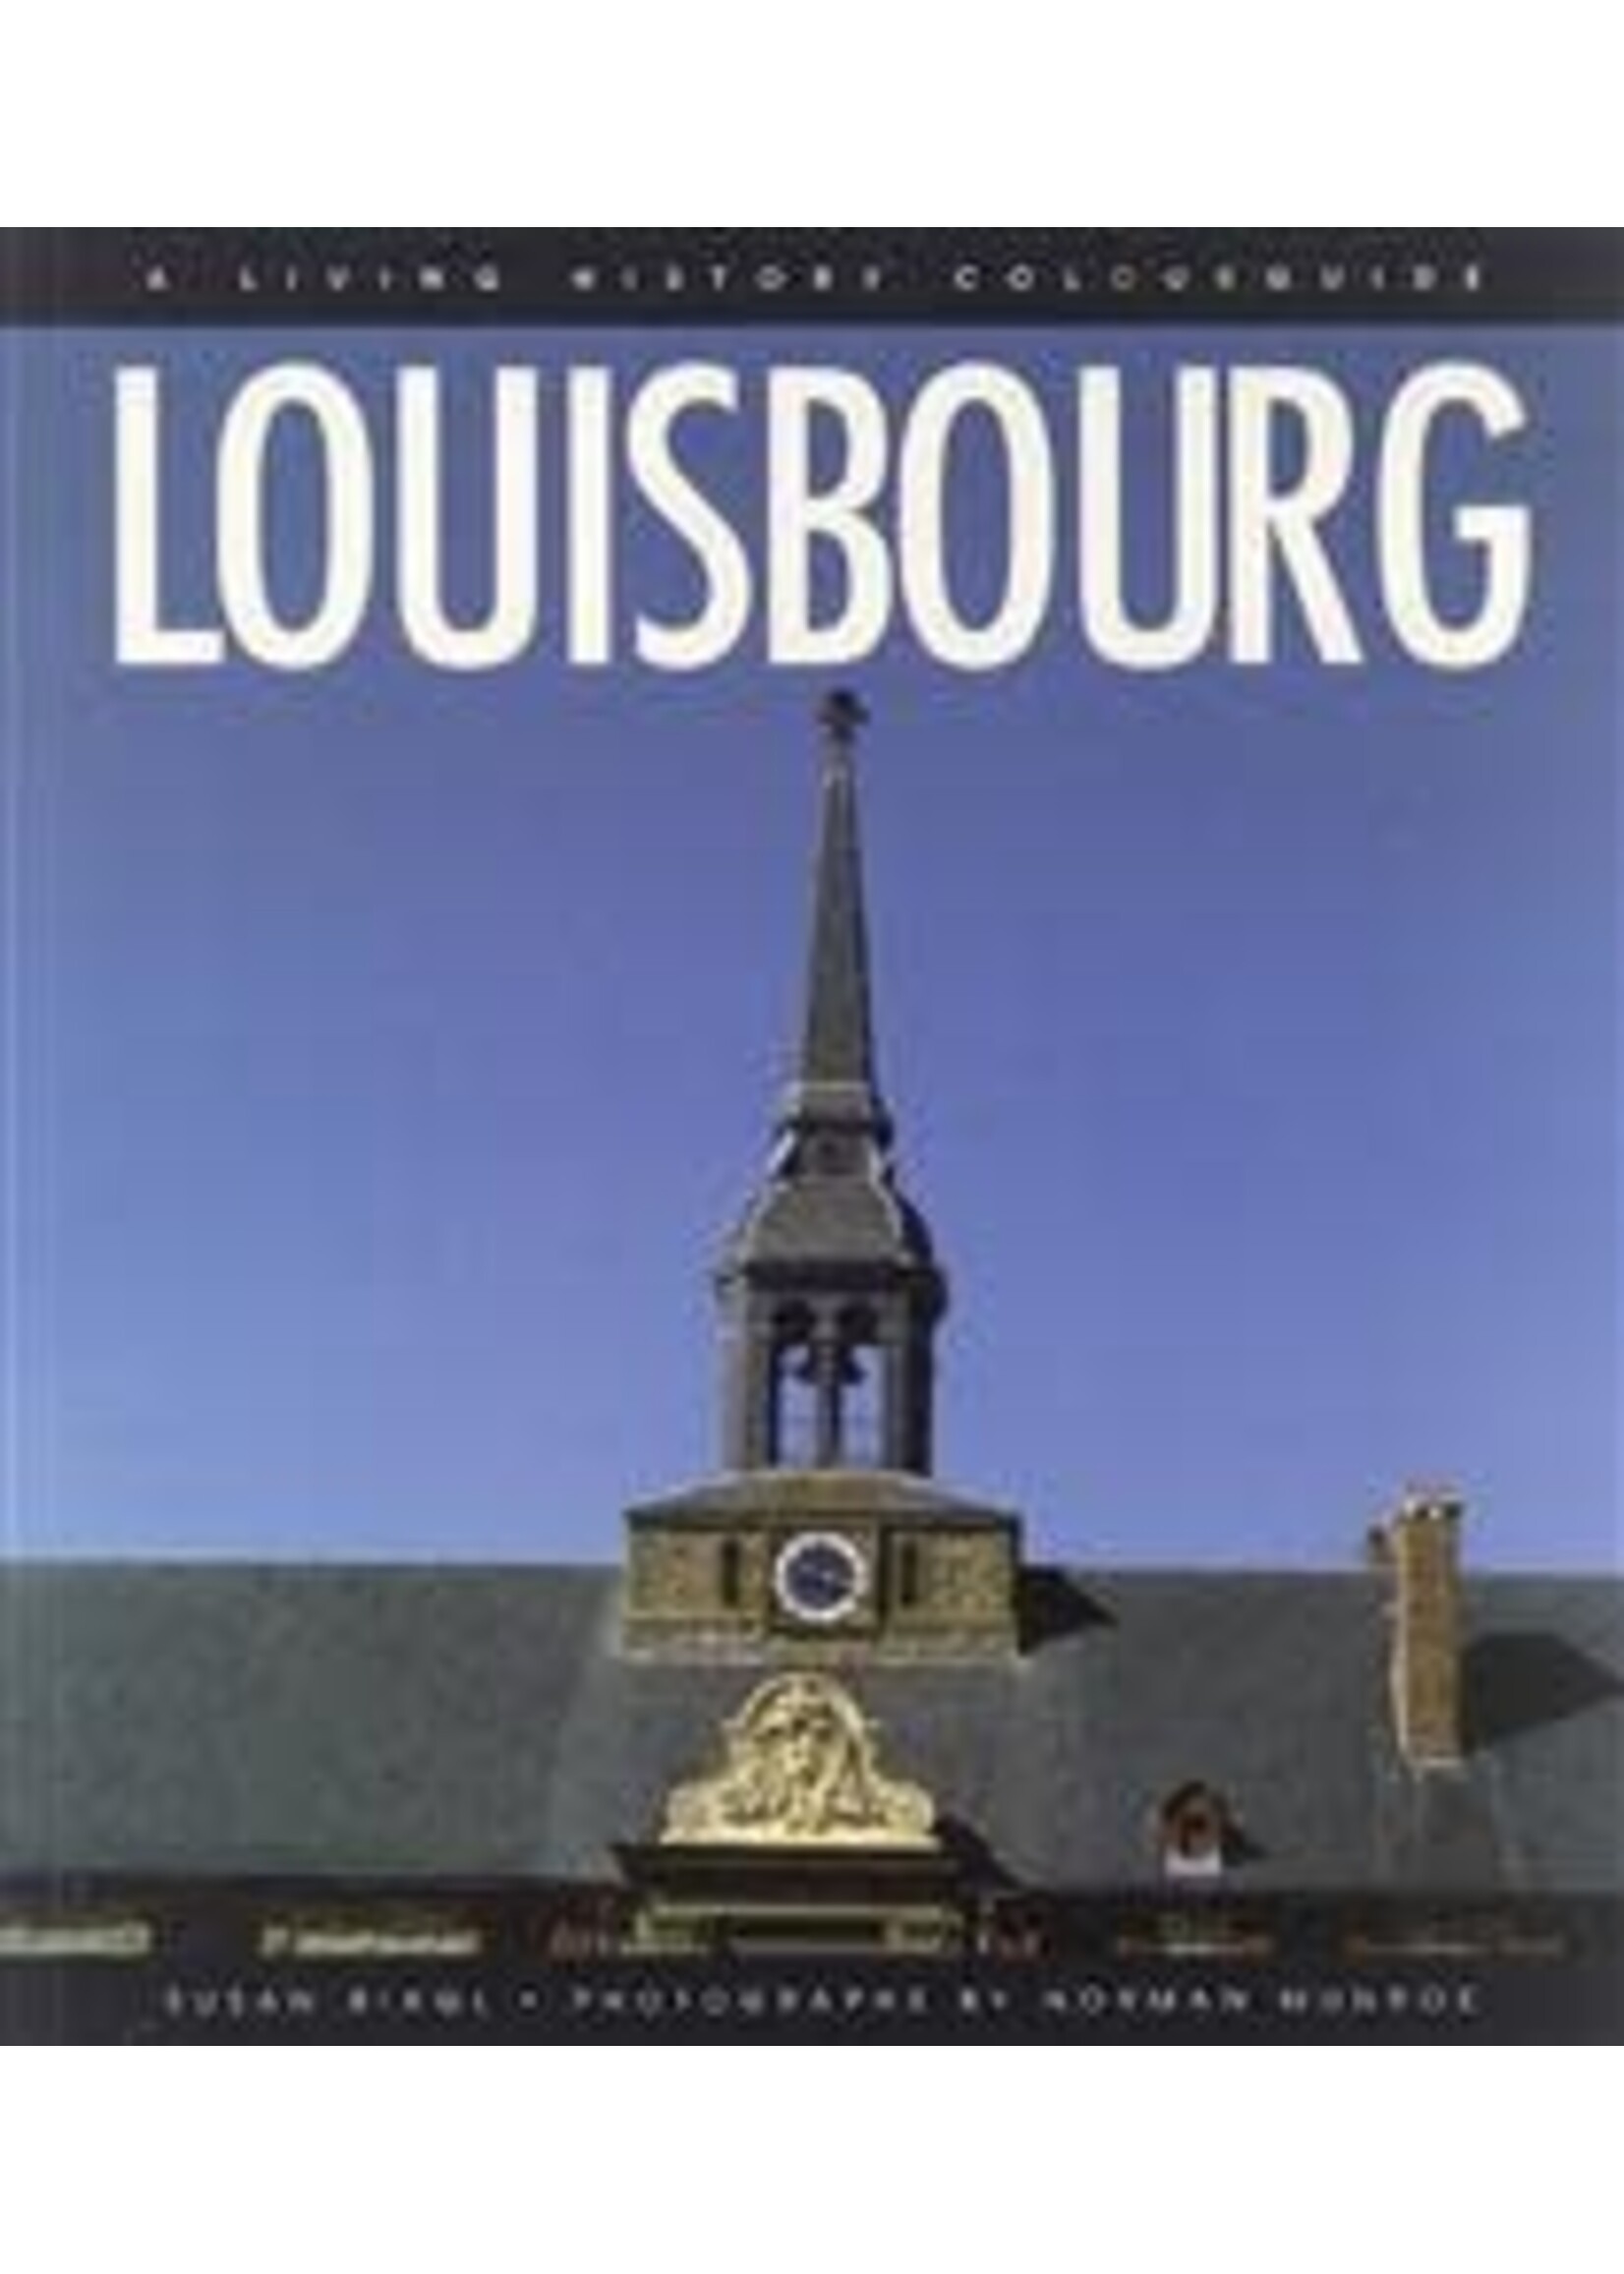 Louisbourg: A Living History Colourguide 2nd ed. by Susan Young de Biagi, David MacVicar